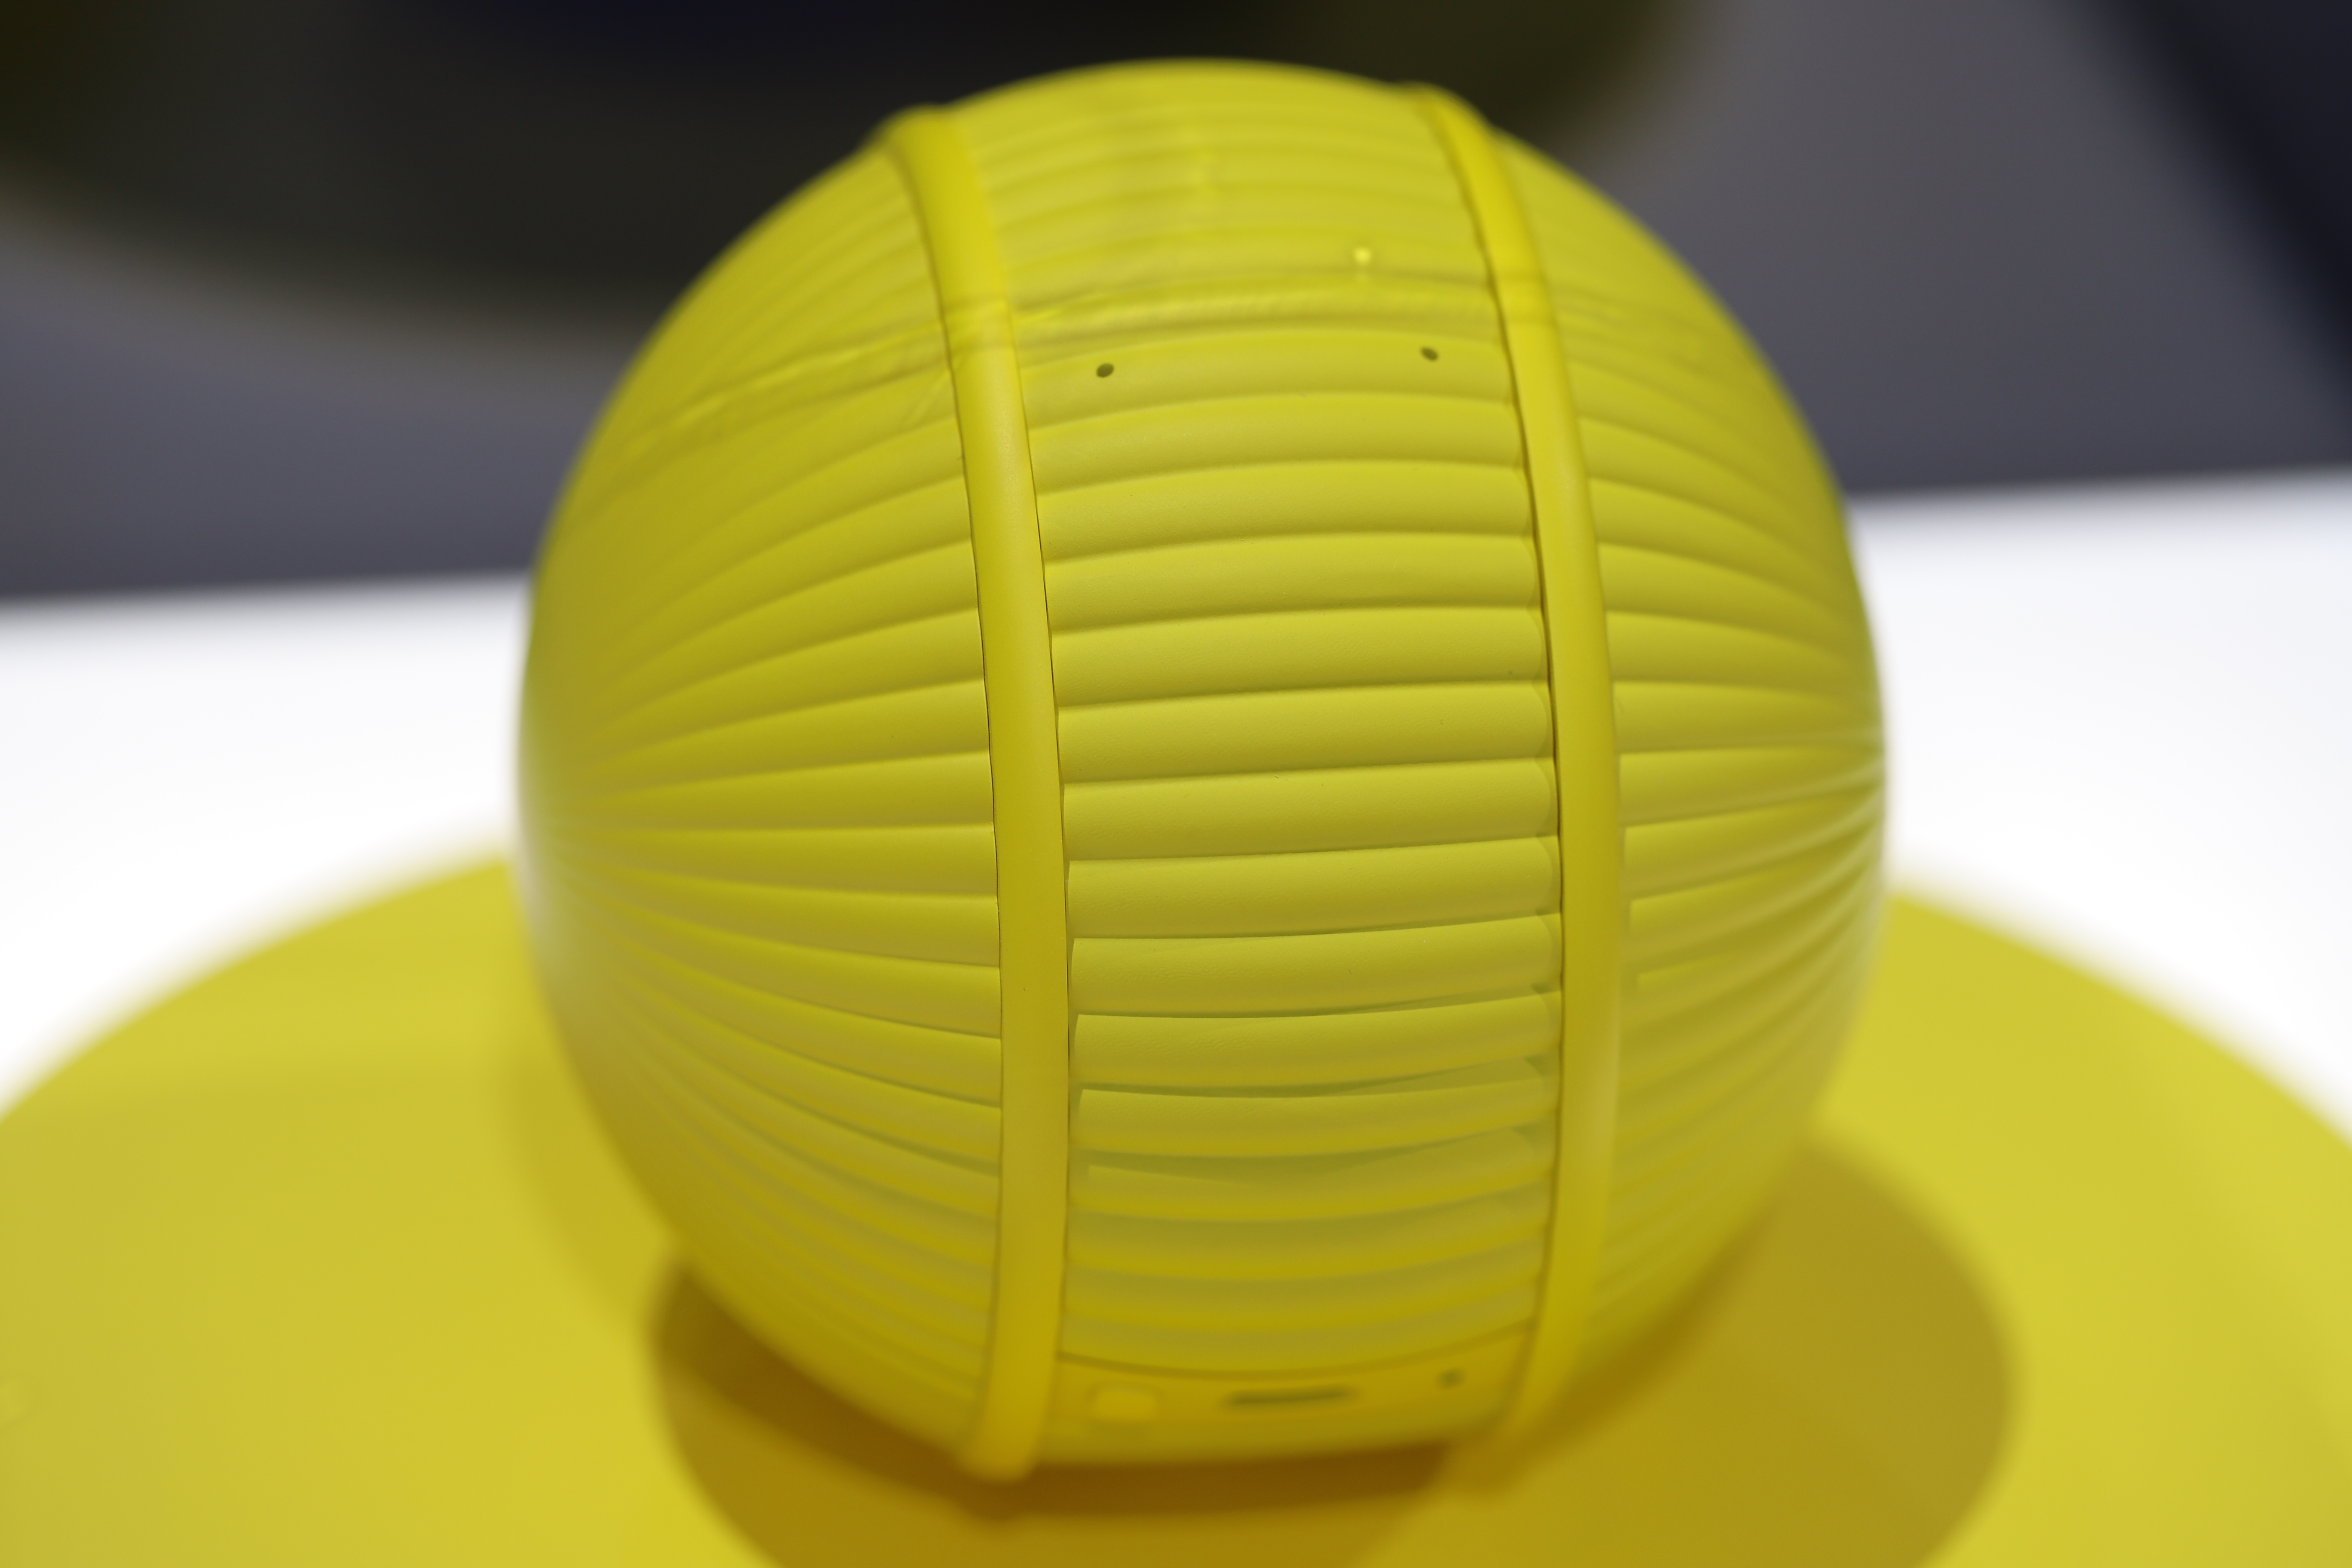 A Closer Look At Ballie Samsung S Friendly Robotic Ball